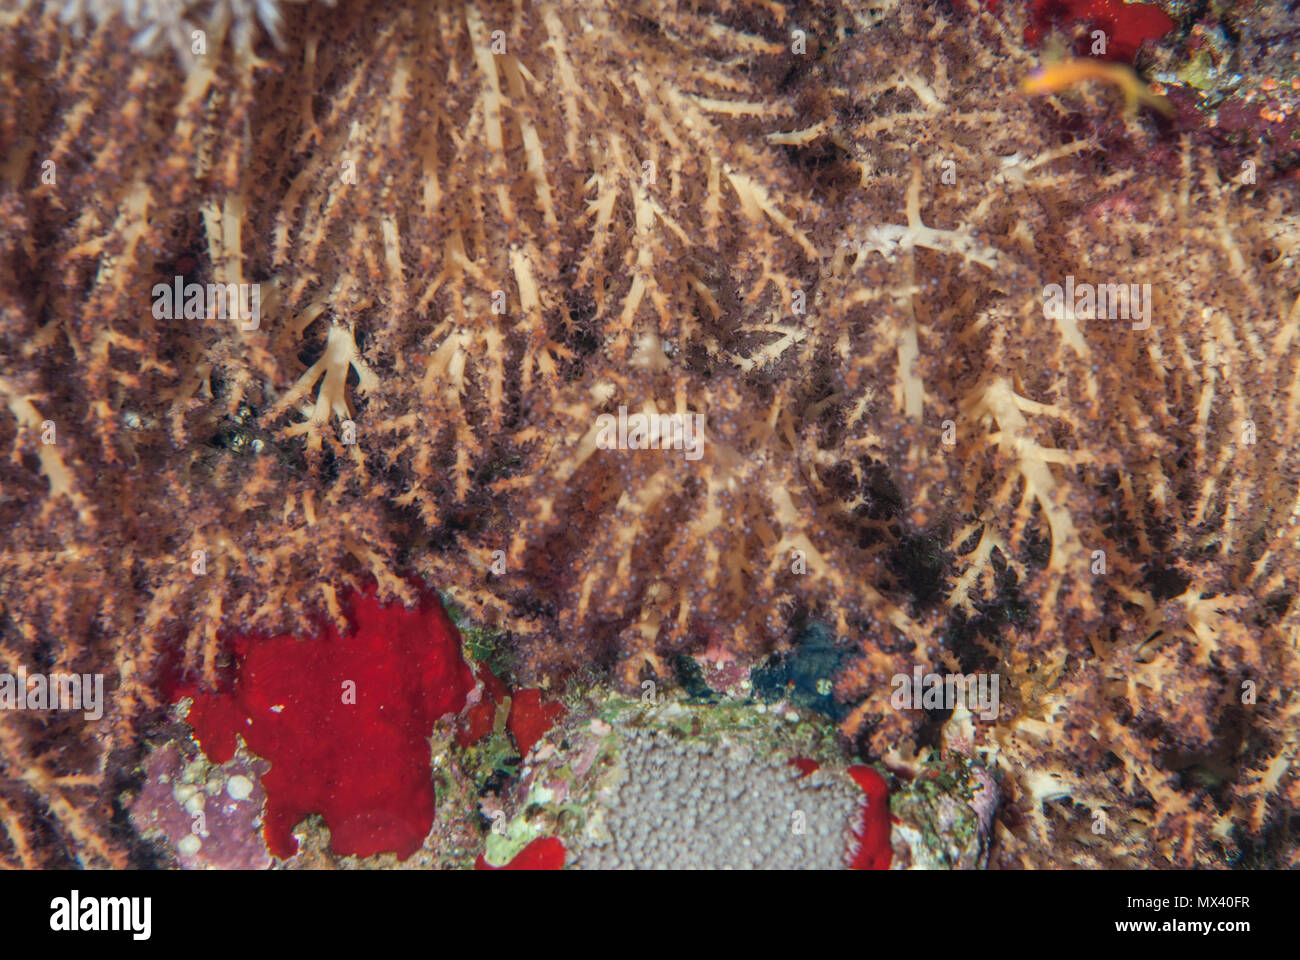 Soft coral, Lobophytum sp., Alcyoniidae, Sharm el Sheikh, Red Sea, Egypt Stock Photo